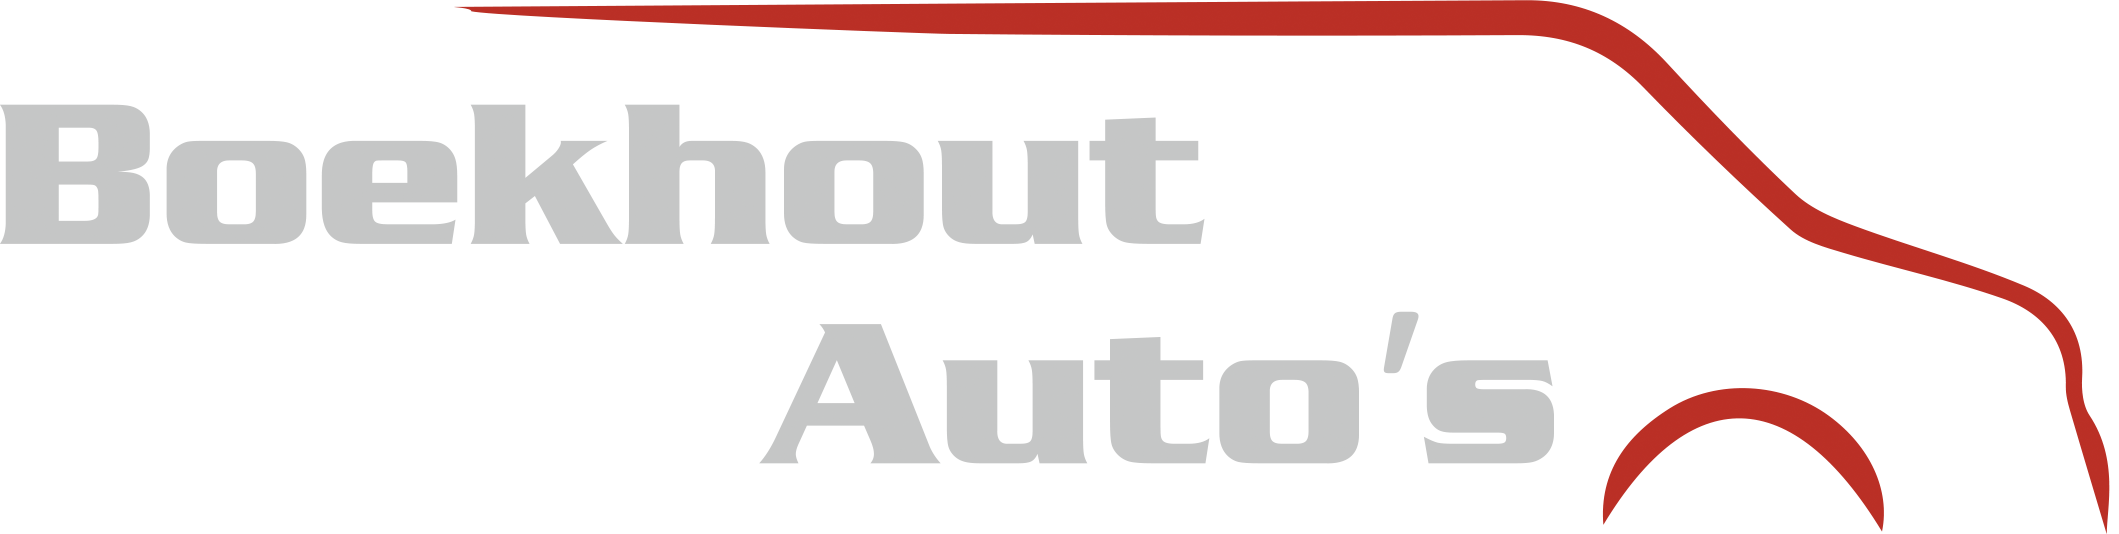 Boekhout Auto's logo